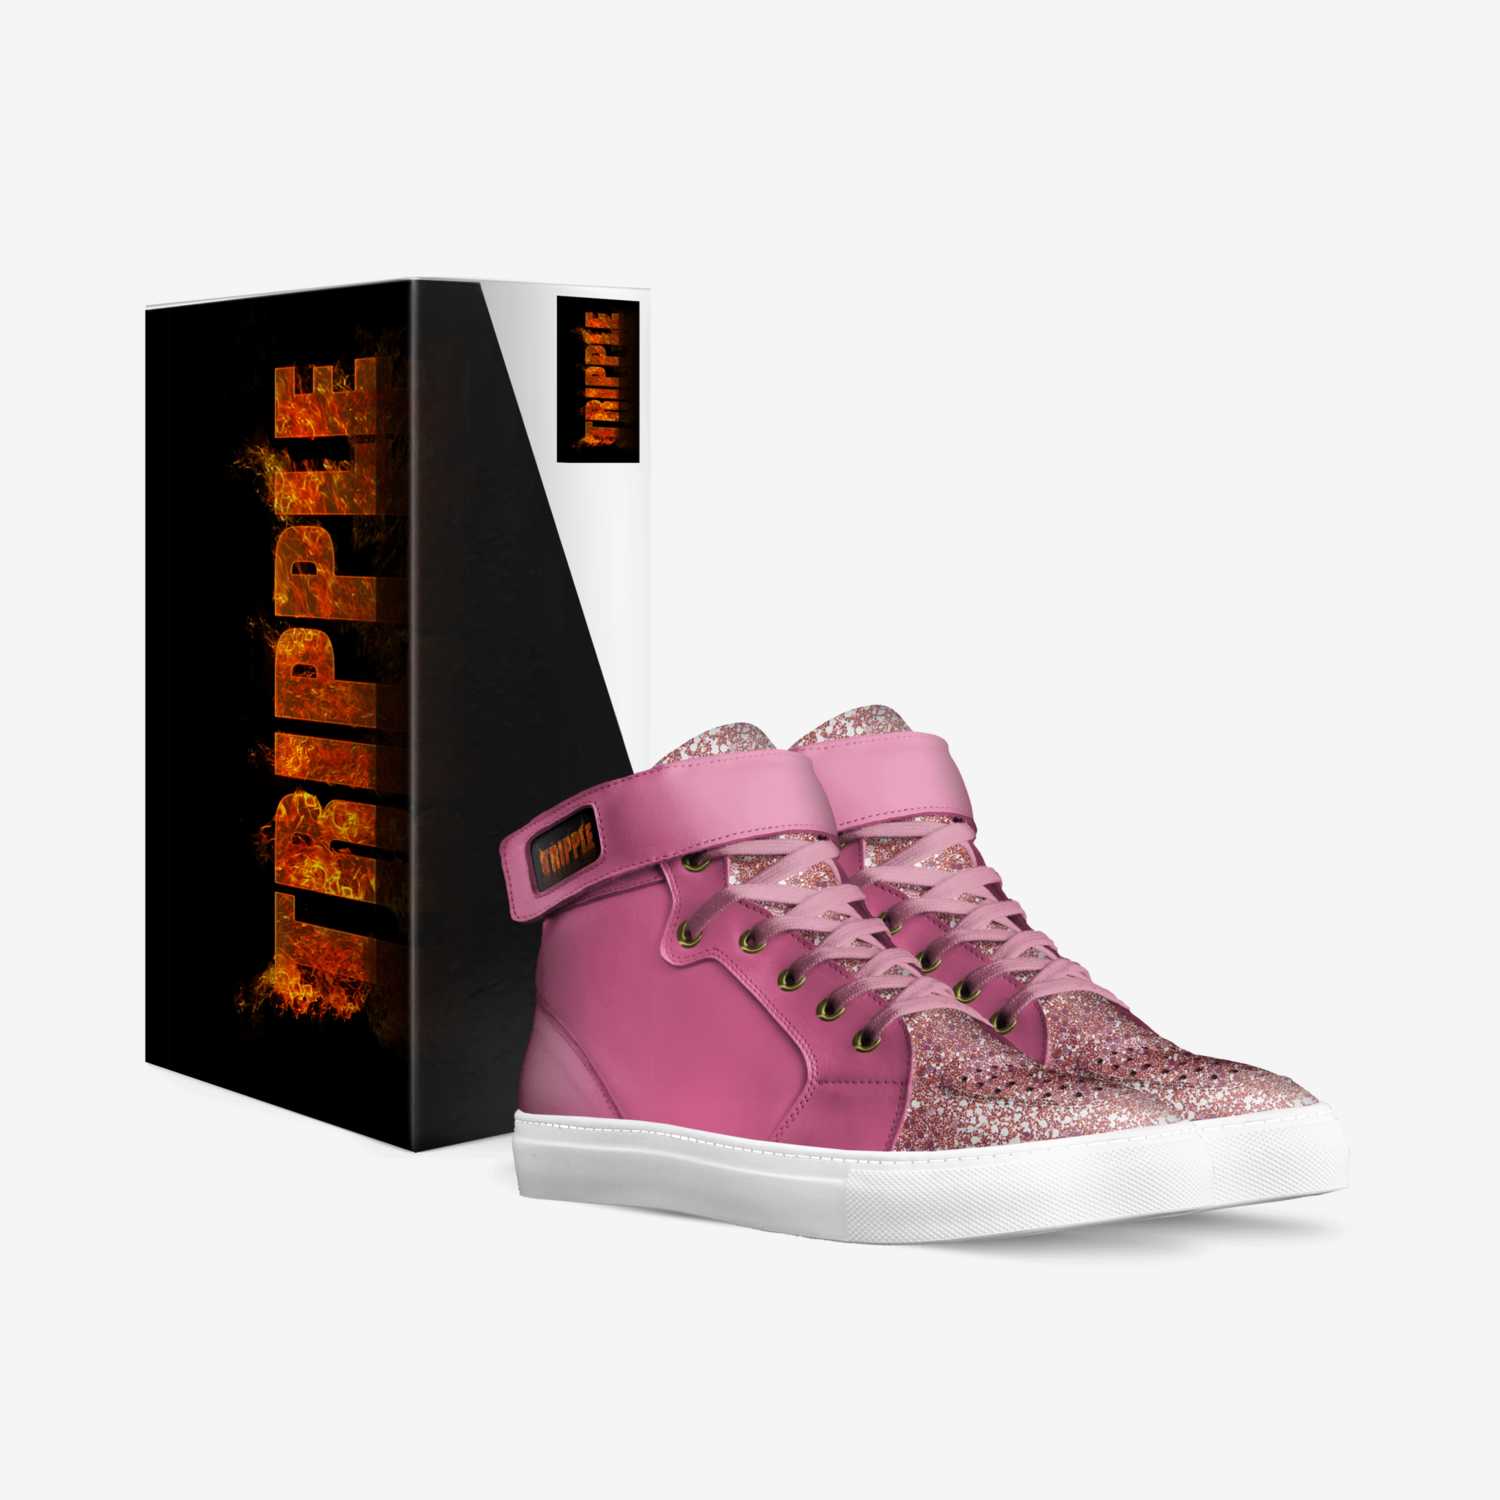 TRIPPLE_SHINE  custom made in Italy shoes by Rachel Ekinde | Box view